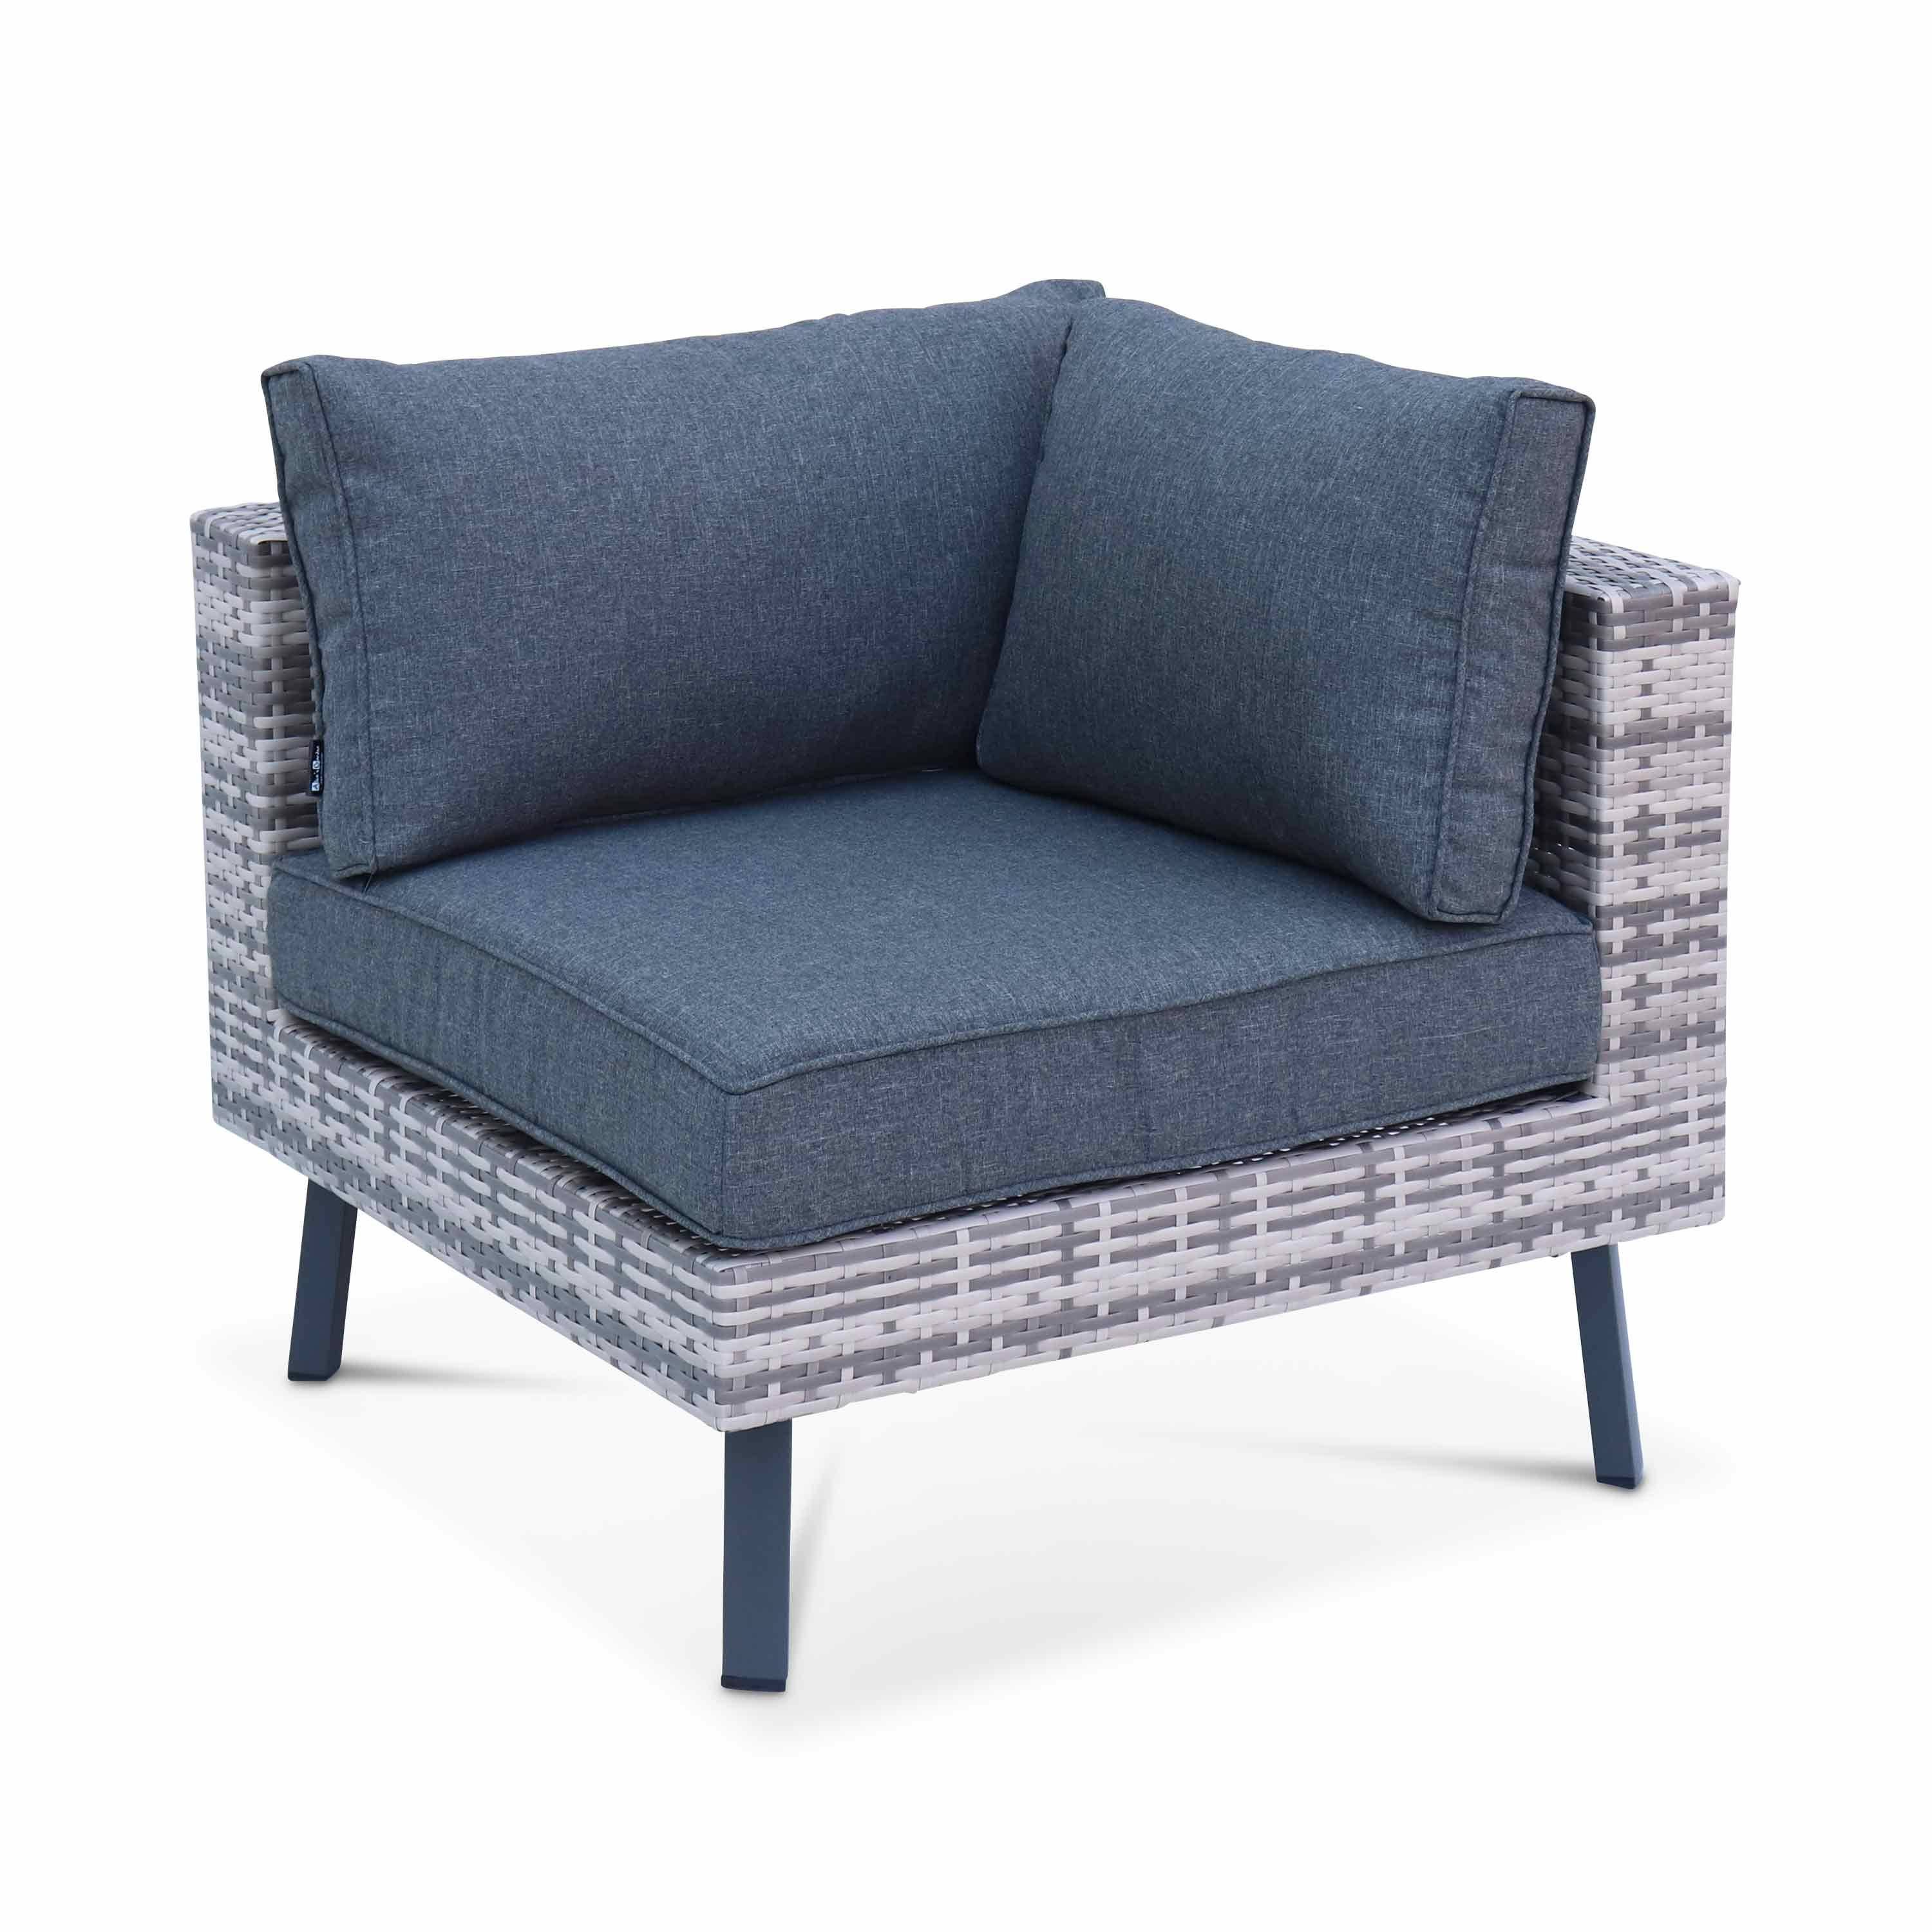 5-seater elevated polyrattan garden sofa set with stylish legs - sofa, 2 armchairs, footrest, coffee table - Alba - Mixed Grey rattan, Charcoal Grey cushions ,sweeek,Photo7